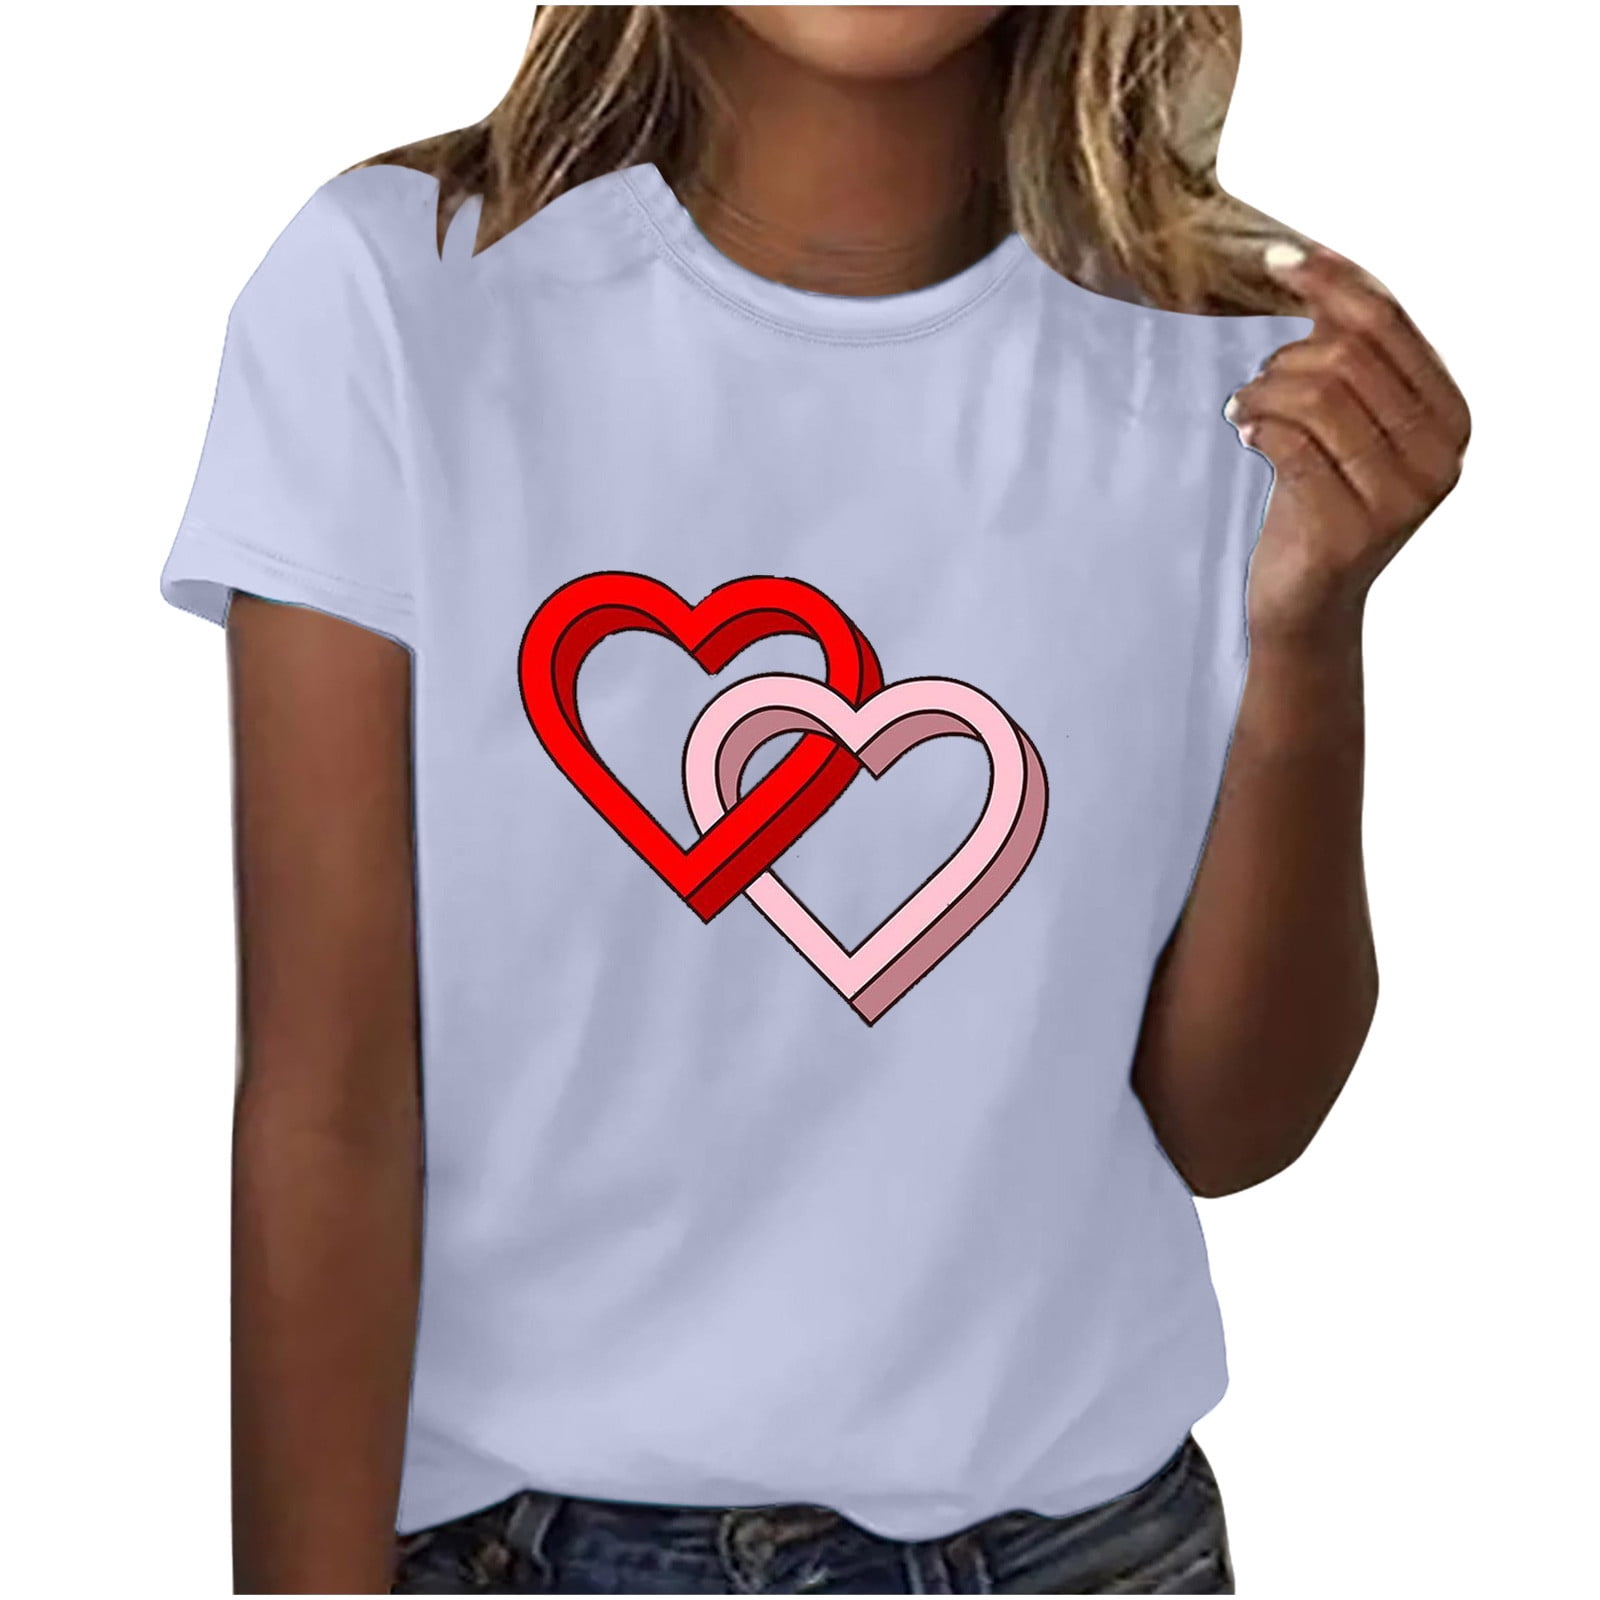 tklpehg valentine shirts for women Short Sleeve Soft Shirts Heart Print  Graphic Tee Shirt Trendy Lover Gift Tee Tops Leisure Summer Loose Pink XL